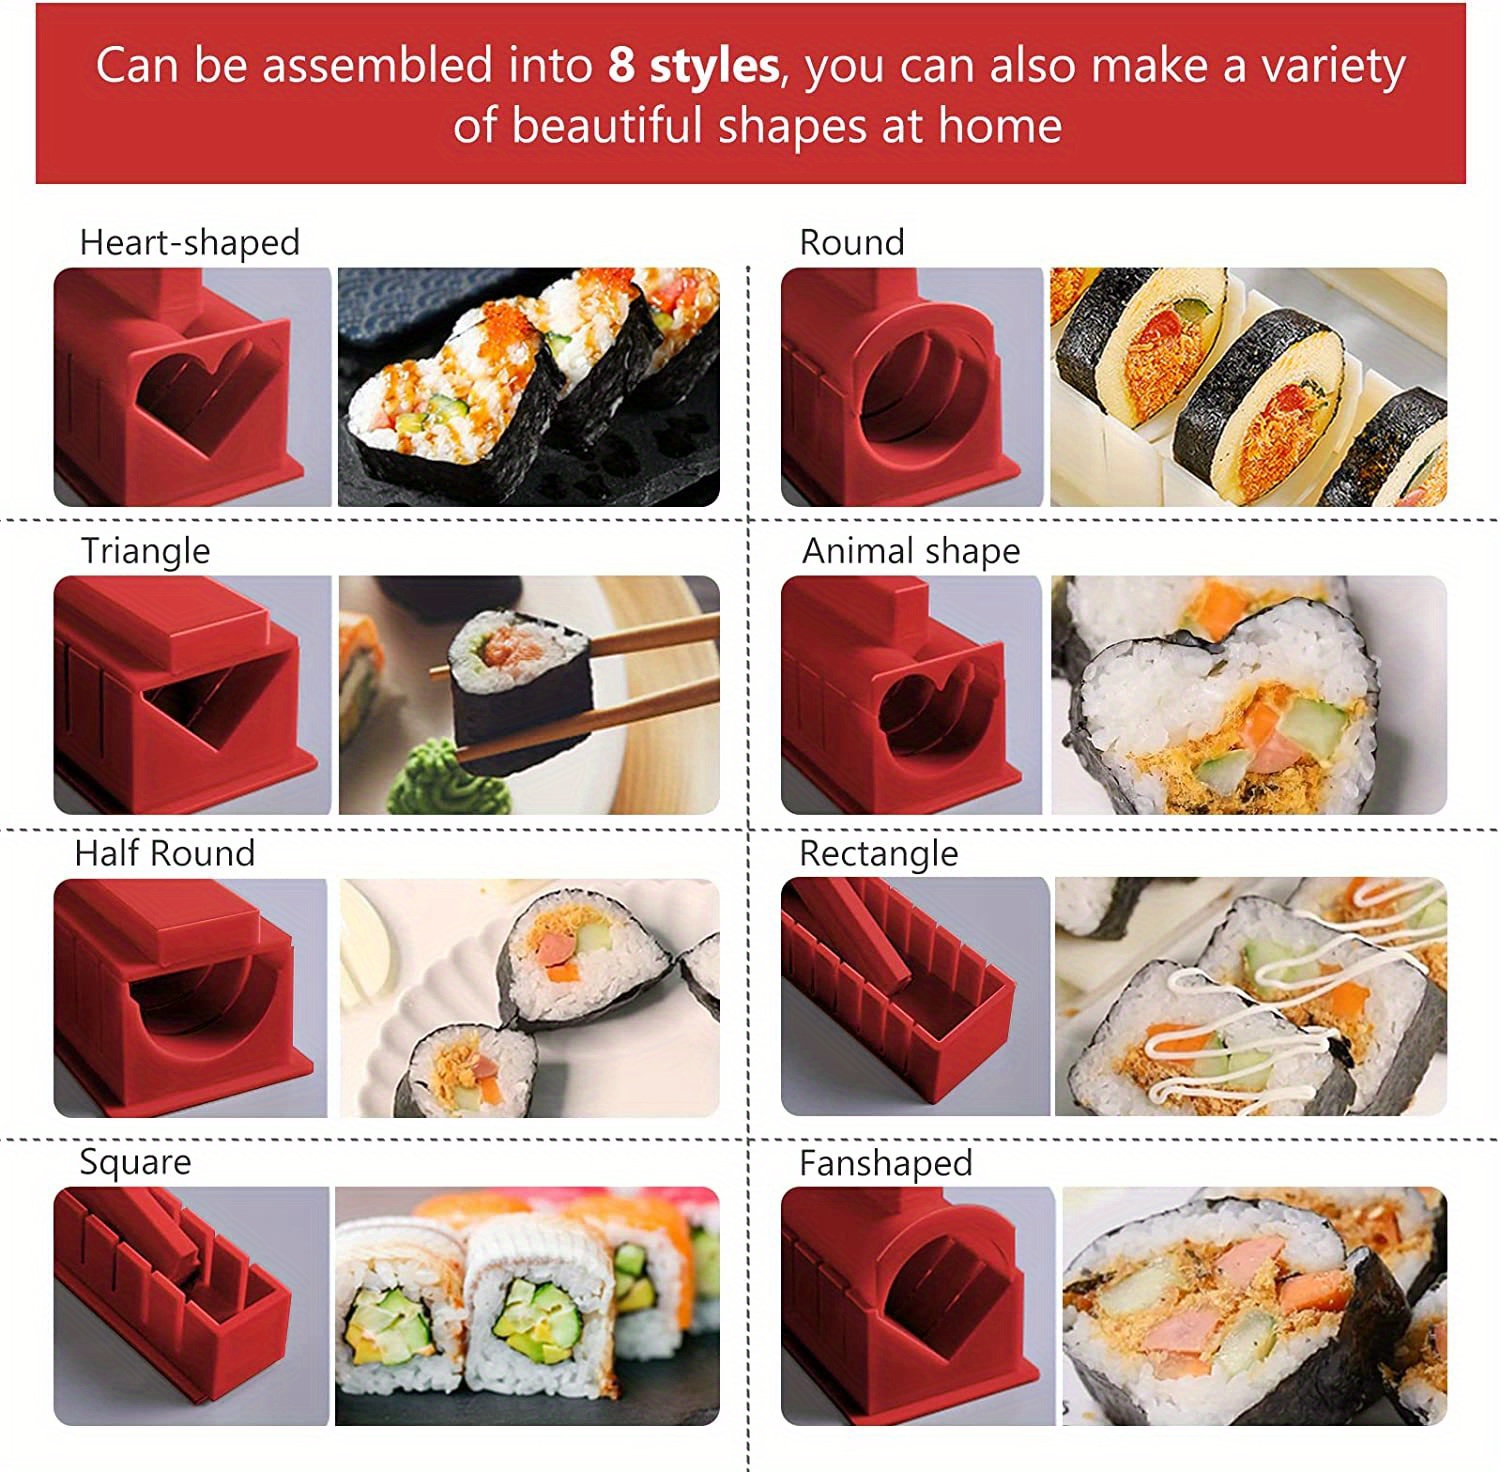 10pcs/set, Sushi Maker Set, Sushi Making Kit, Plastic Sushi Maker Tool,  Sushi Roller Kit, Rice Mold, Rice Ball Mold, DIY Mold, Spreader, Kitchen  Tools